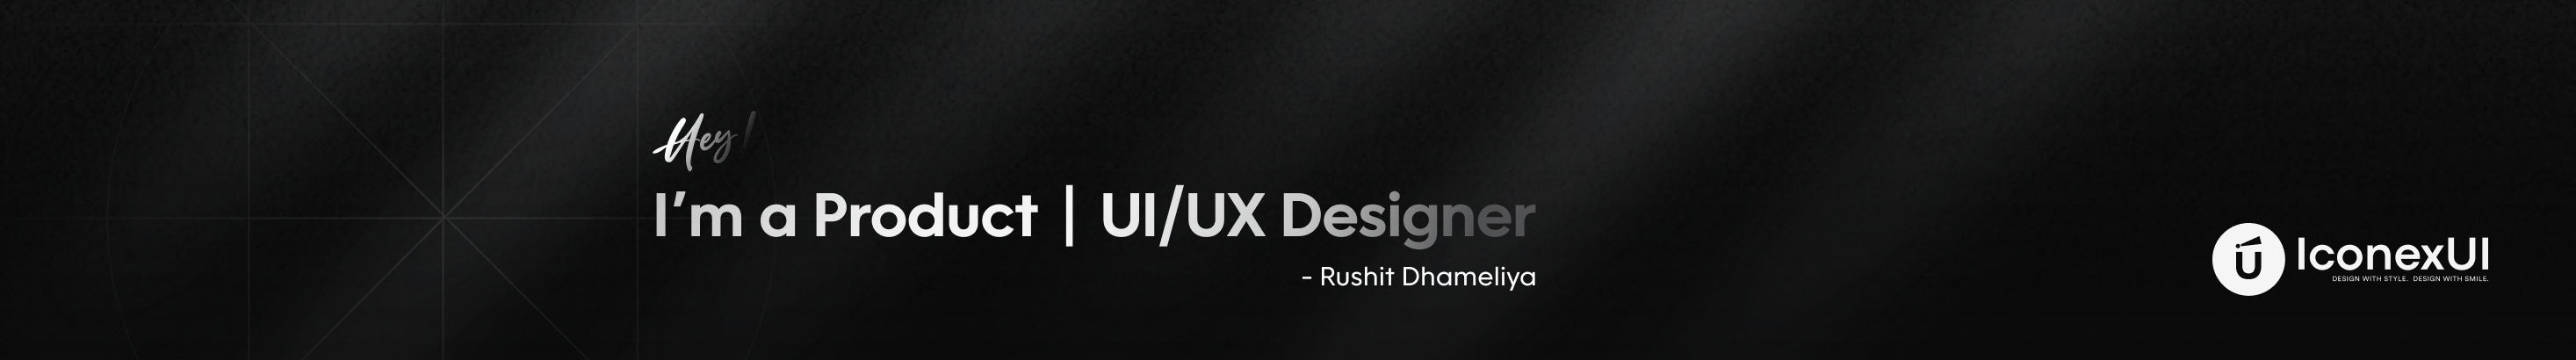 Rushit Dhameliya's profile banner